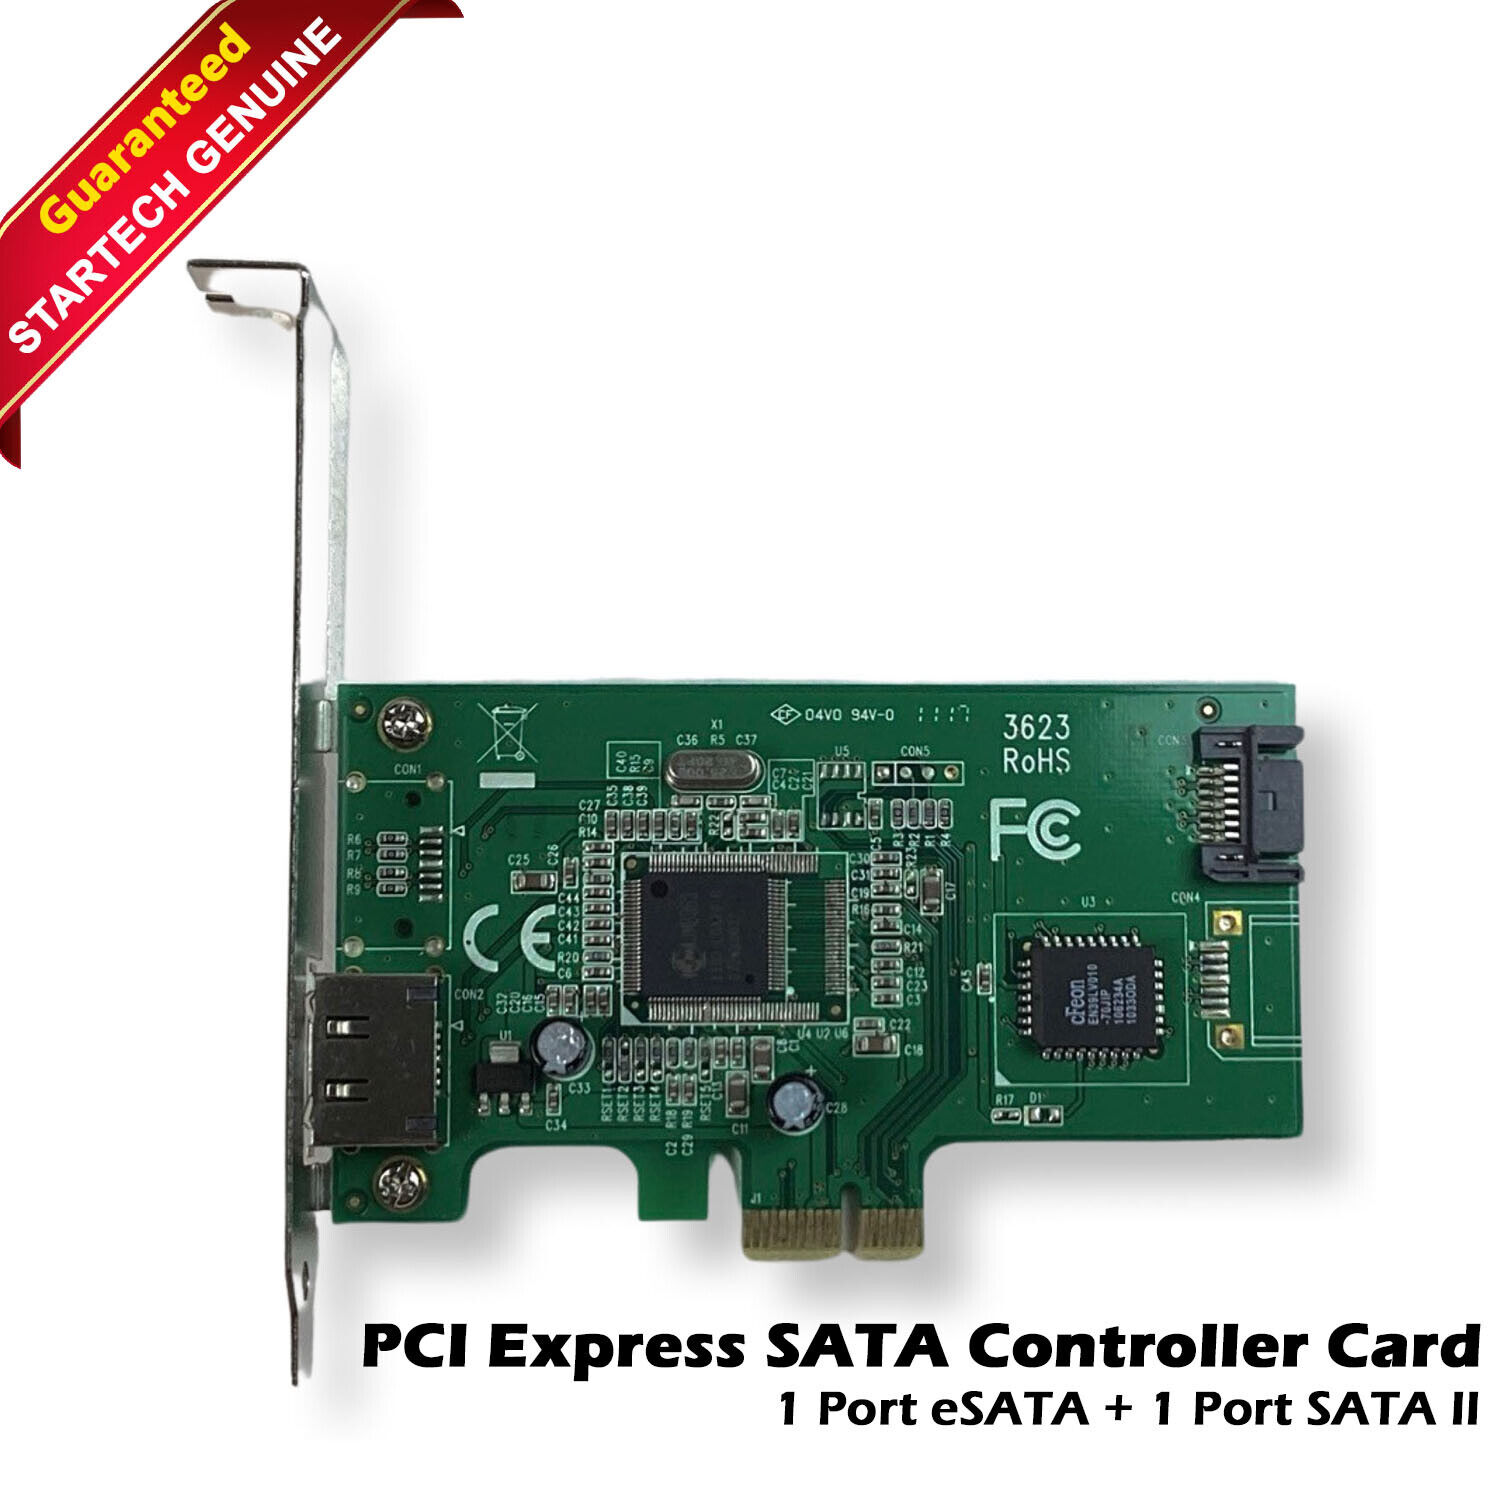 StarTech 1 Port eSATA + 1 Port SATA II PCI Express SATA Controller Card 7VCM4